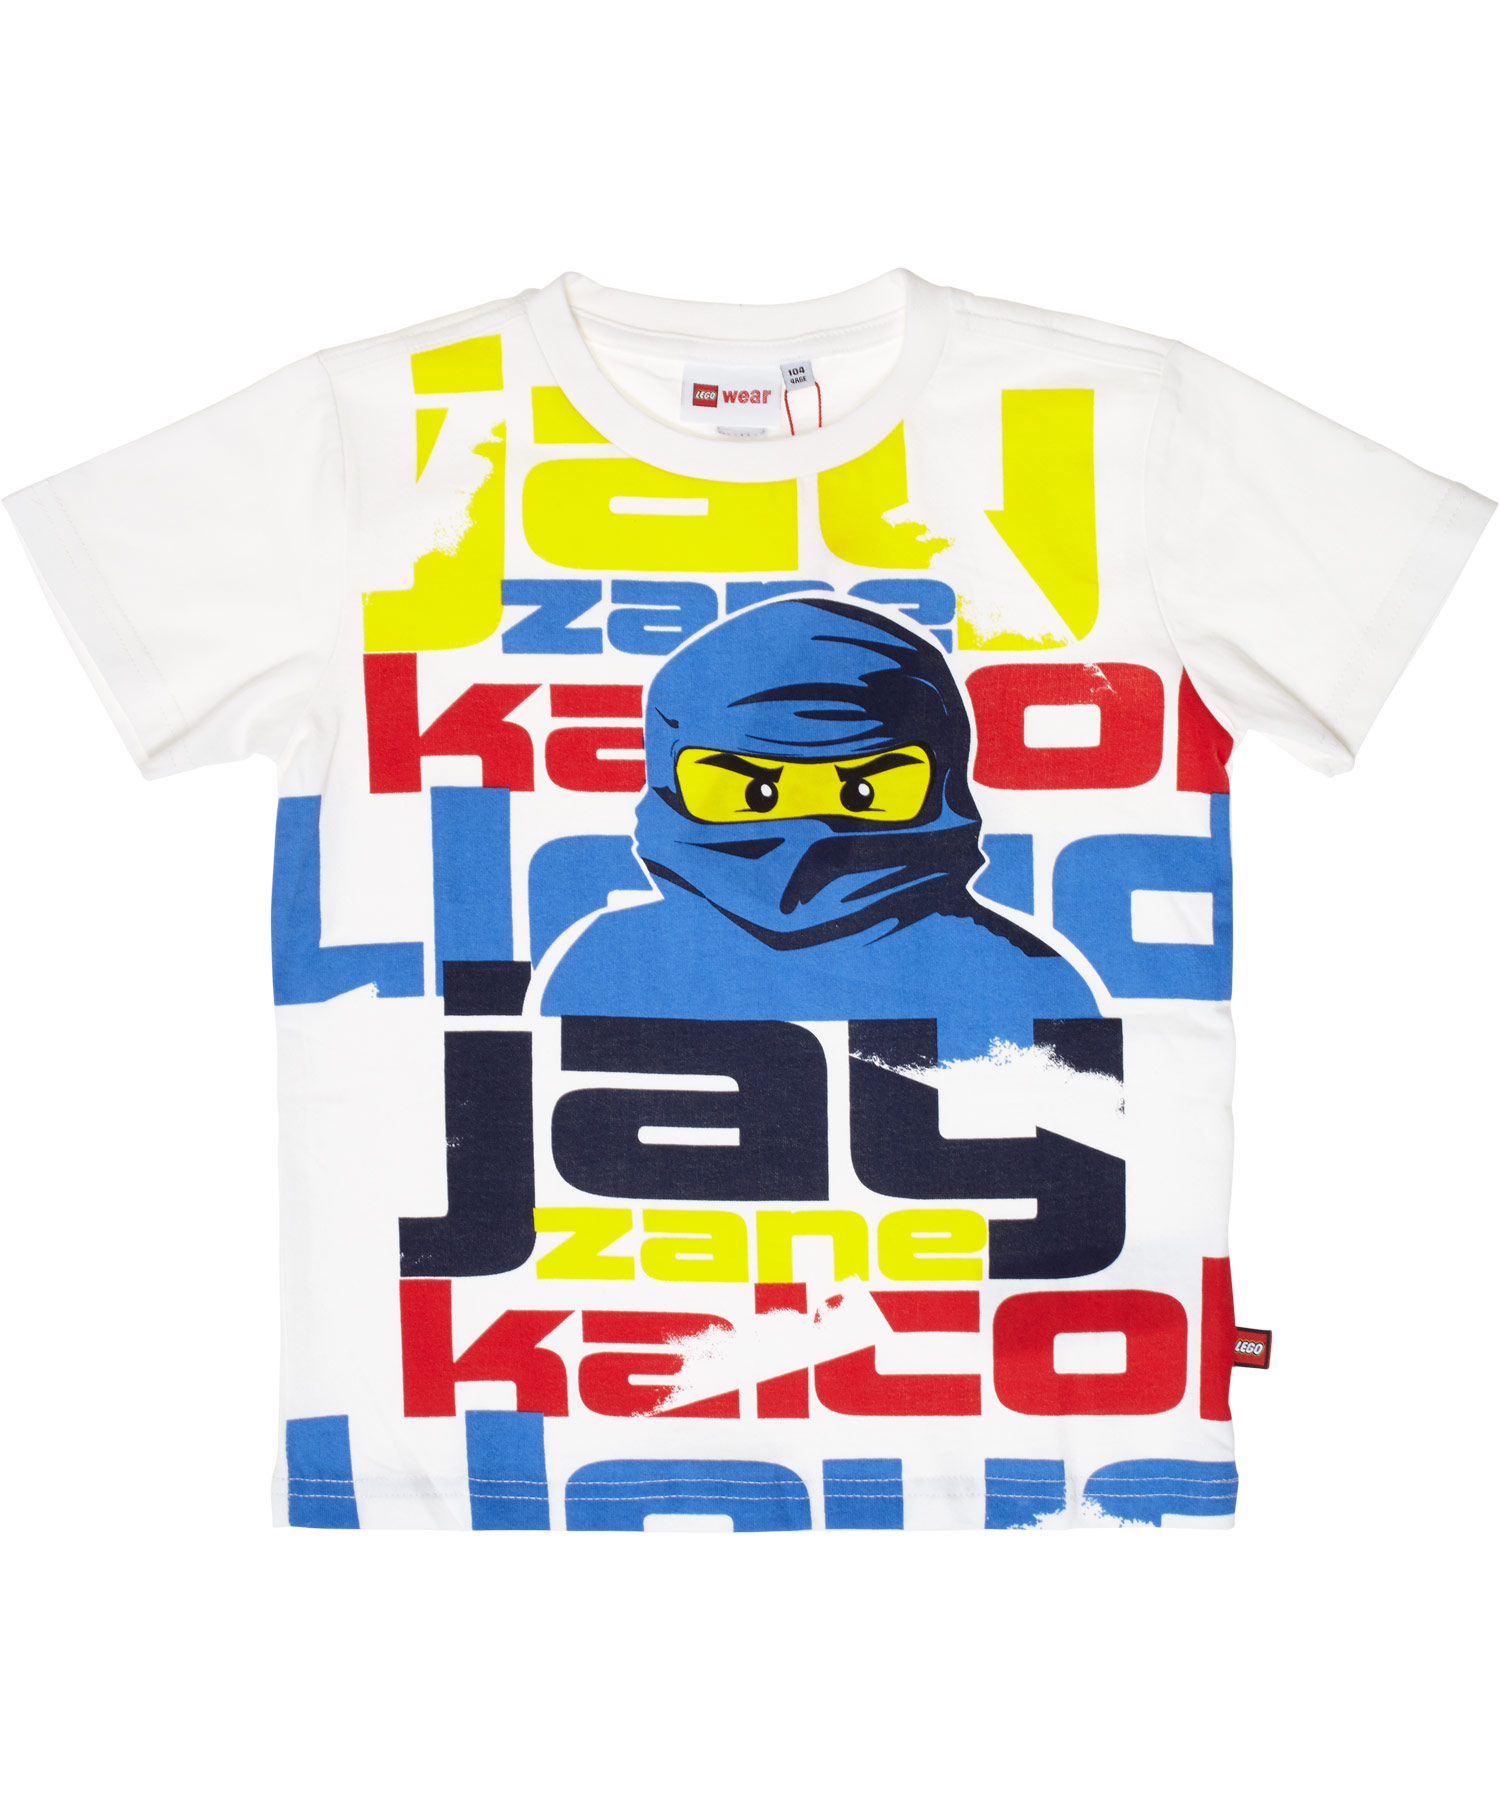 New! LEGO superb white Ninjago t-shirt with Jay, the blue ninja | LEGO Wear